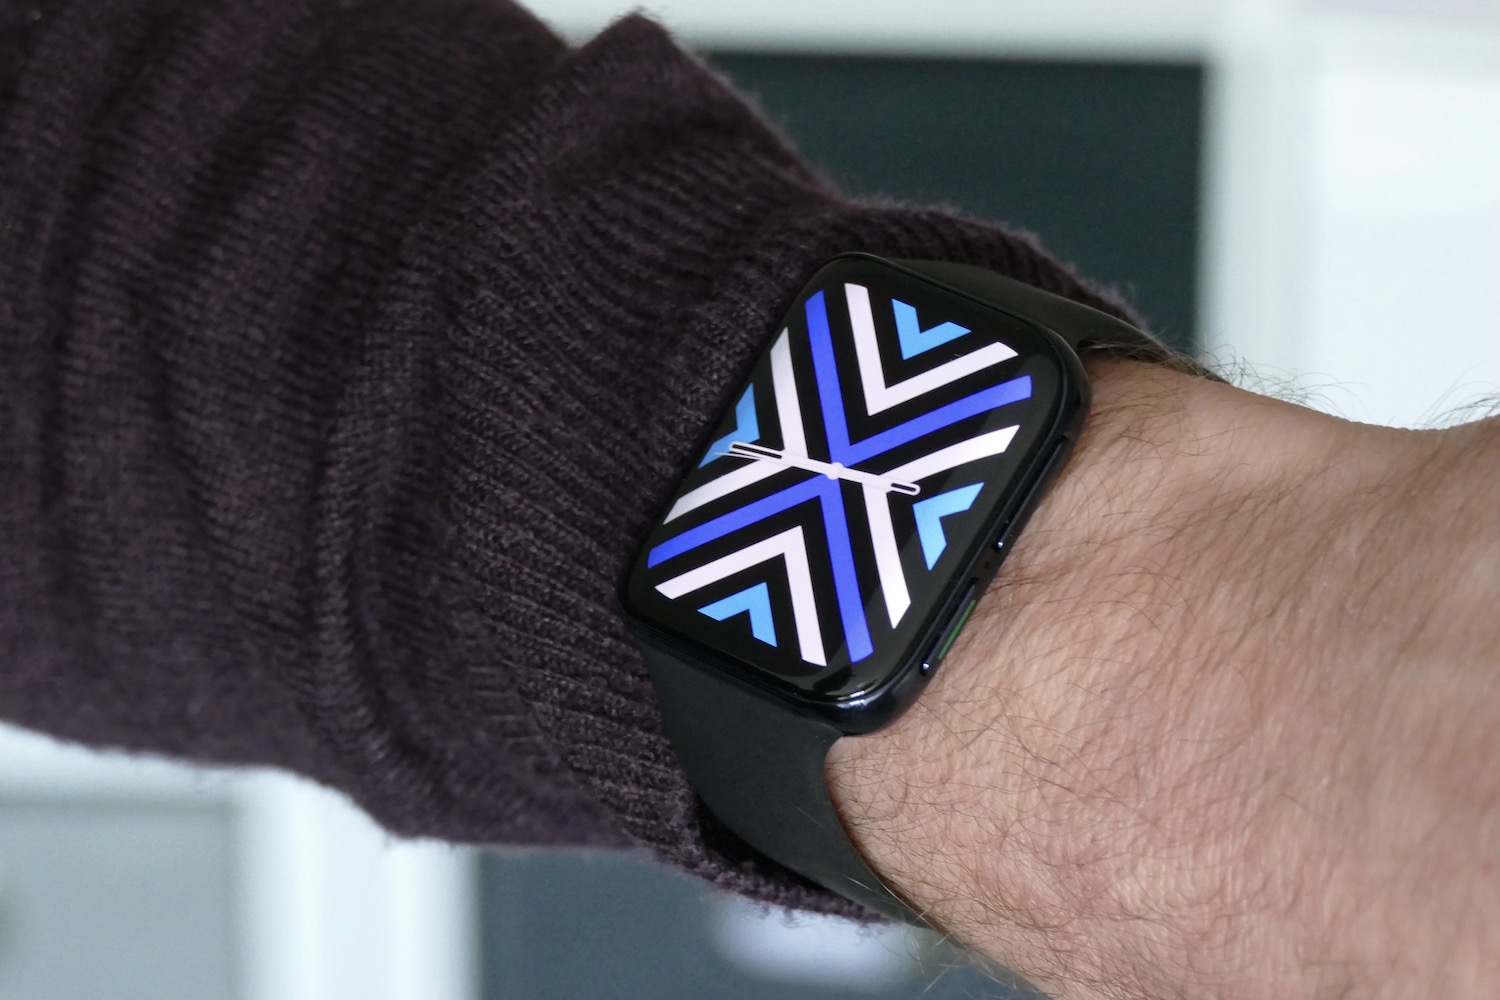 First Look: Oppo Watch 46mm (WiFi) - Consumer NZ